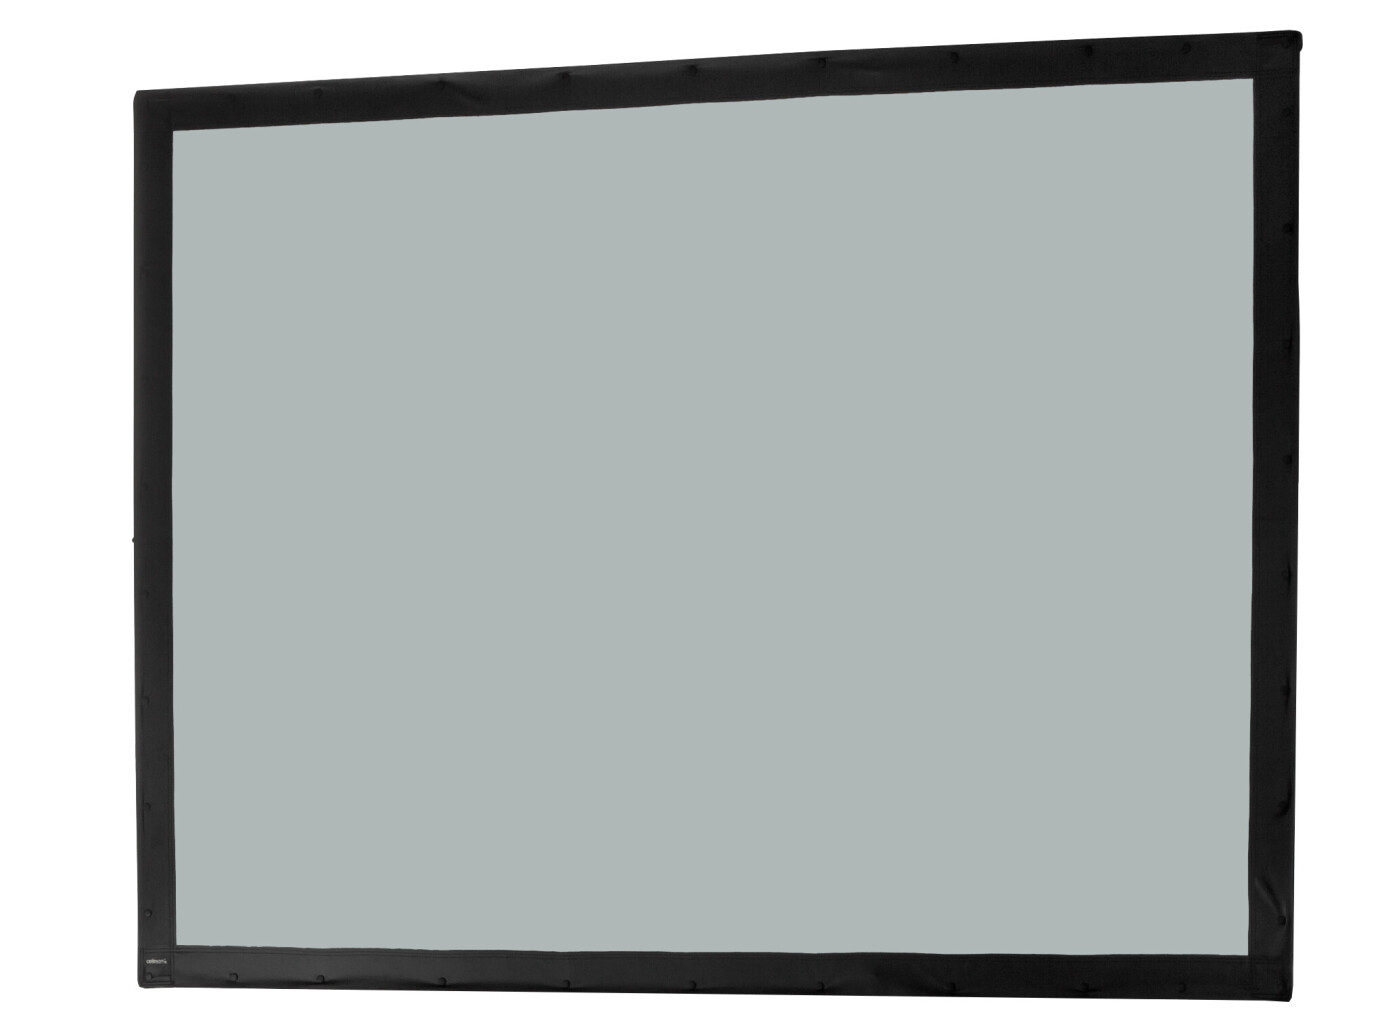 celexon Tuch für Faltrahmen Mobil Expert - 366 x 274 cm Rückprojektion